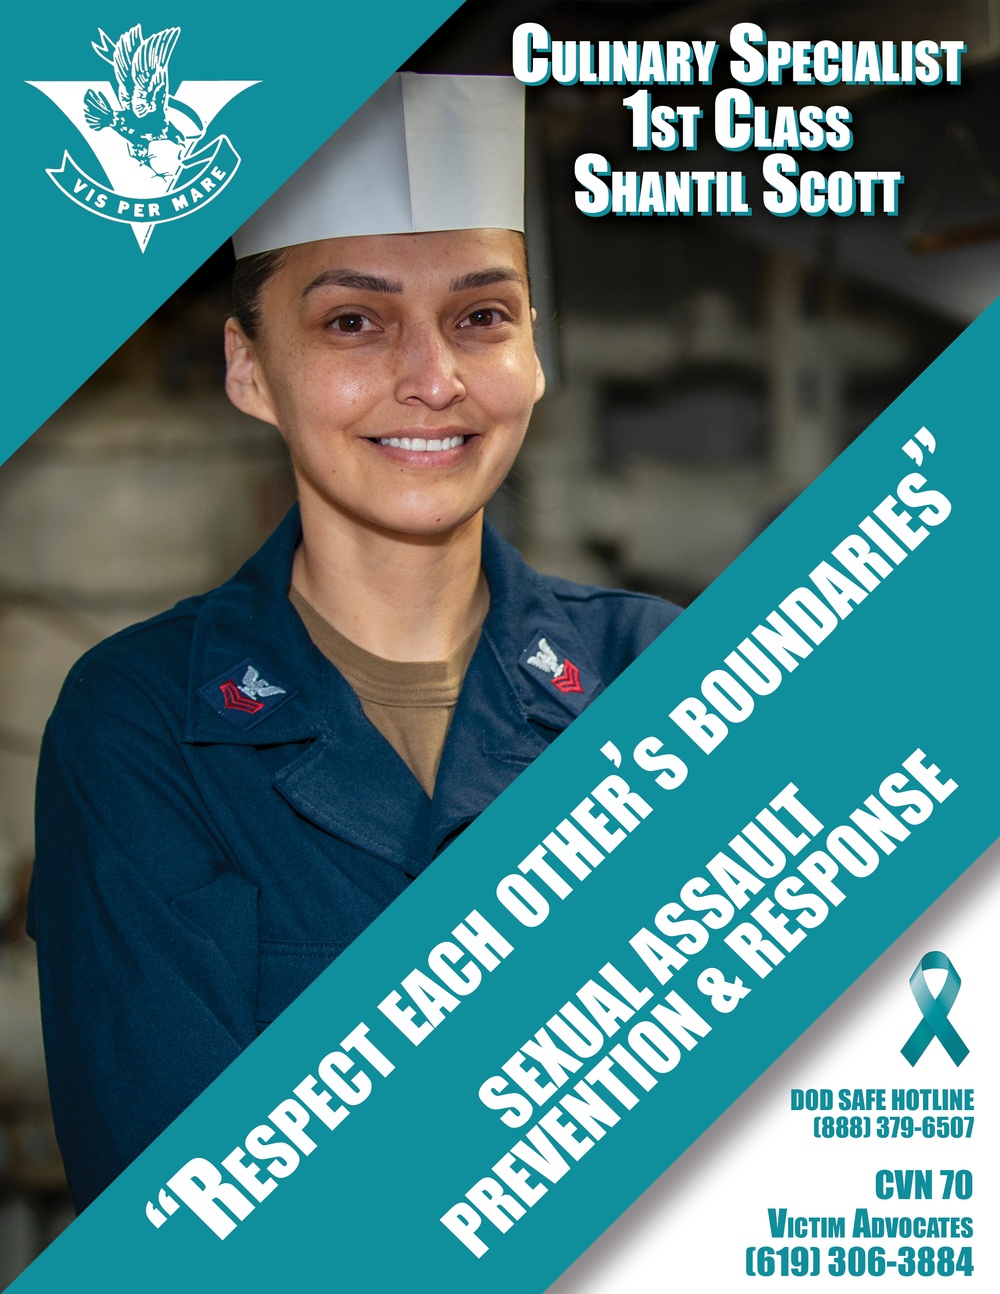 USS Carl Vinson (CVN 70) SAPR Awareness Campaign poster